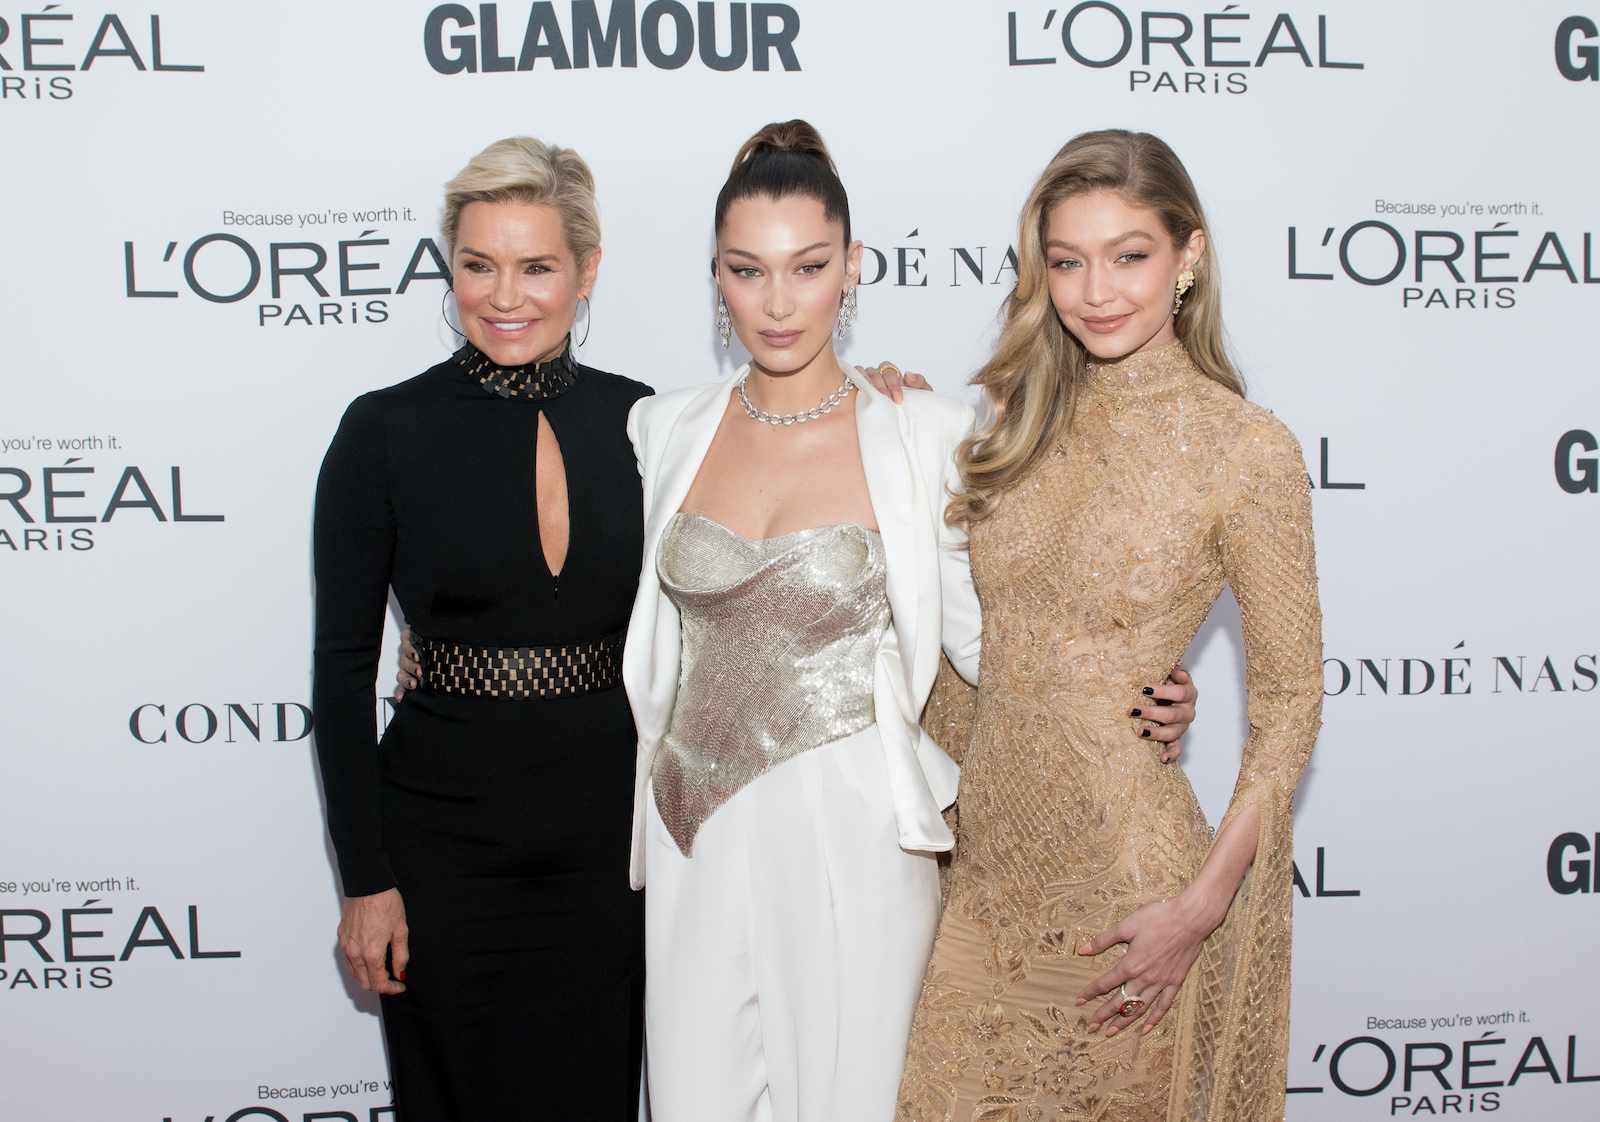 Yolanda Hadid, Bella Hadid, and Gigi Hadid smile for cameras during an awards ceremony 